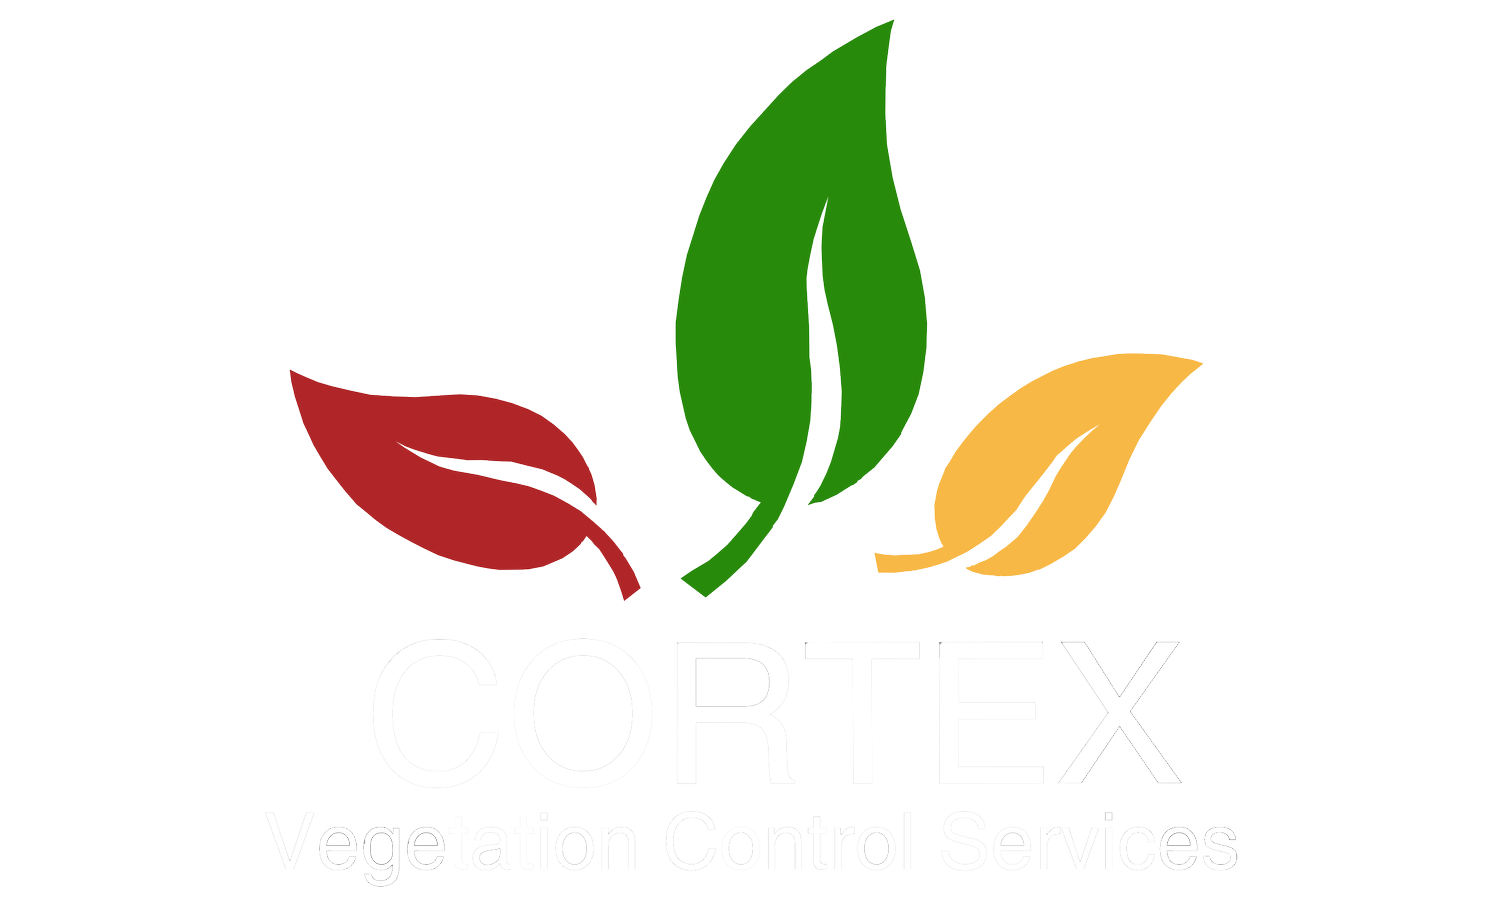 Cortex Vegetation Control Alberta